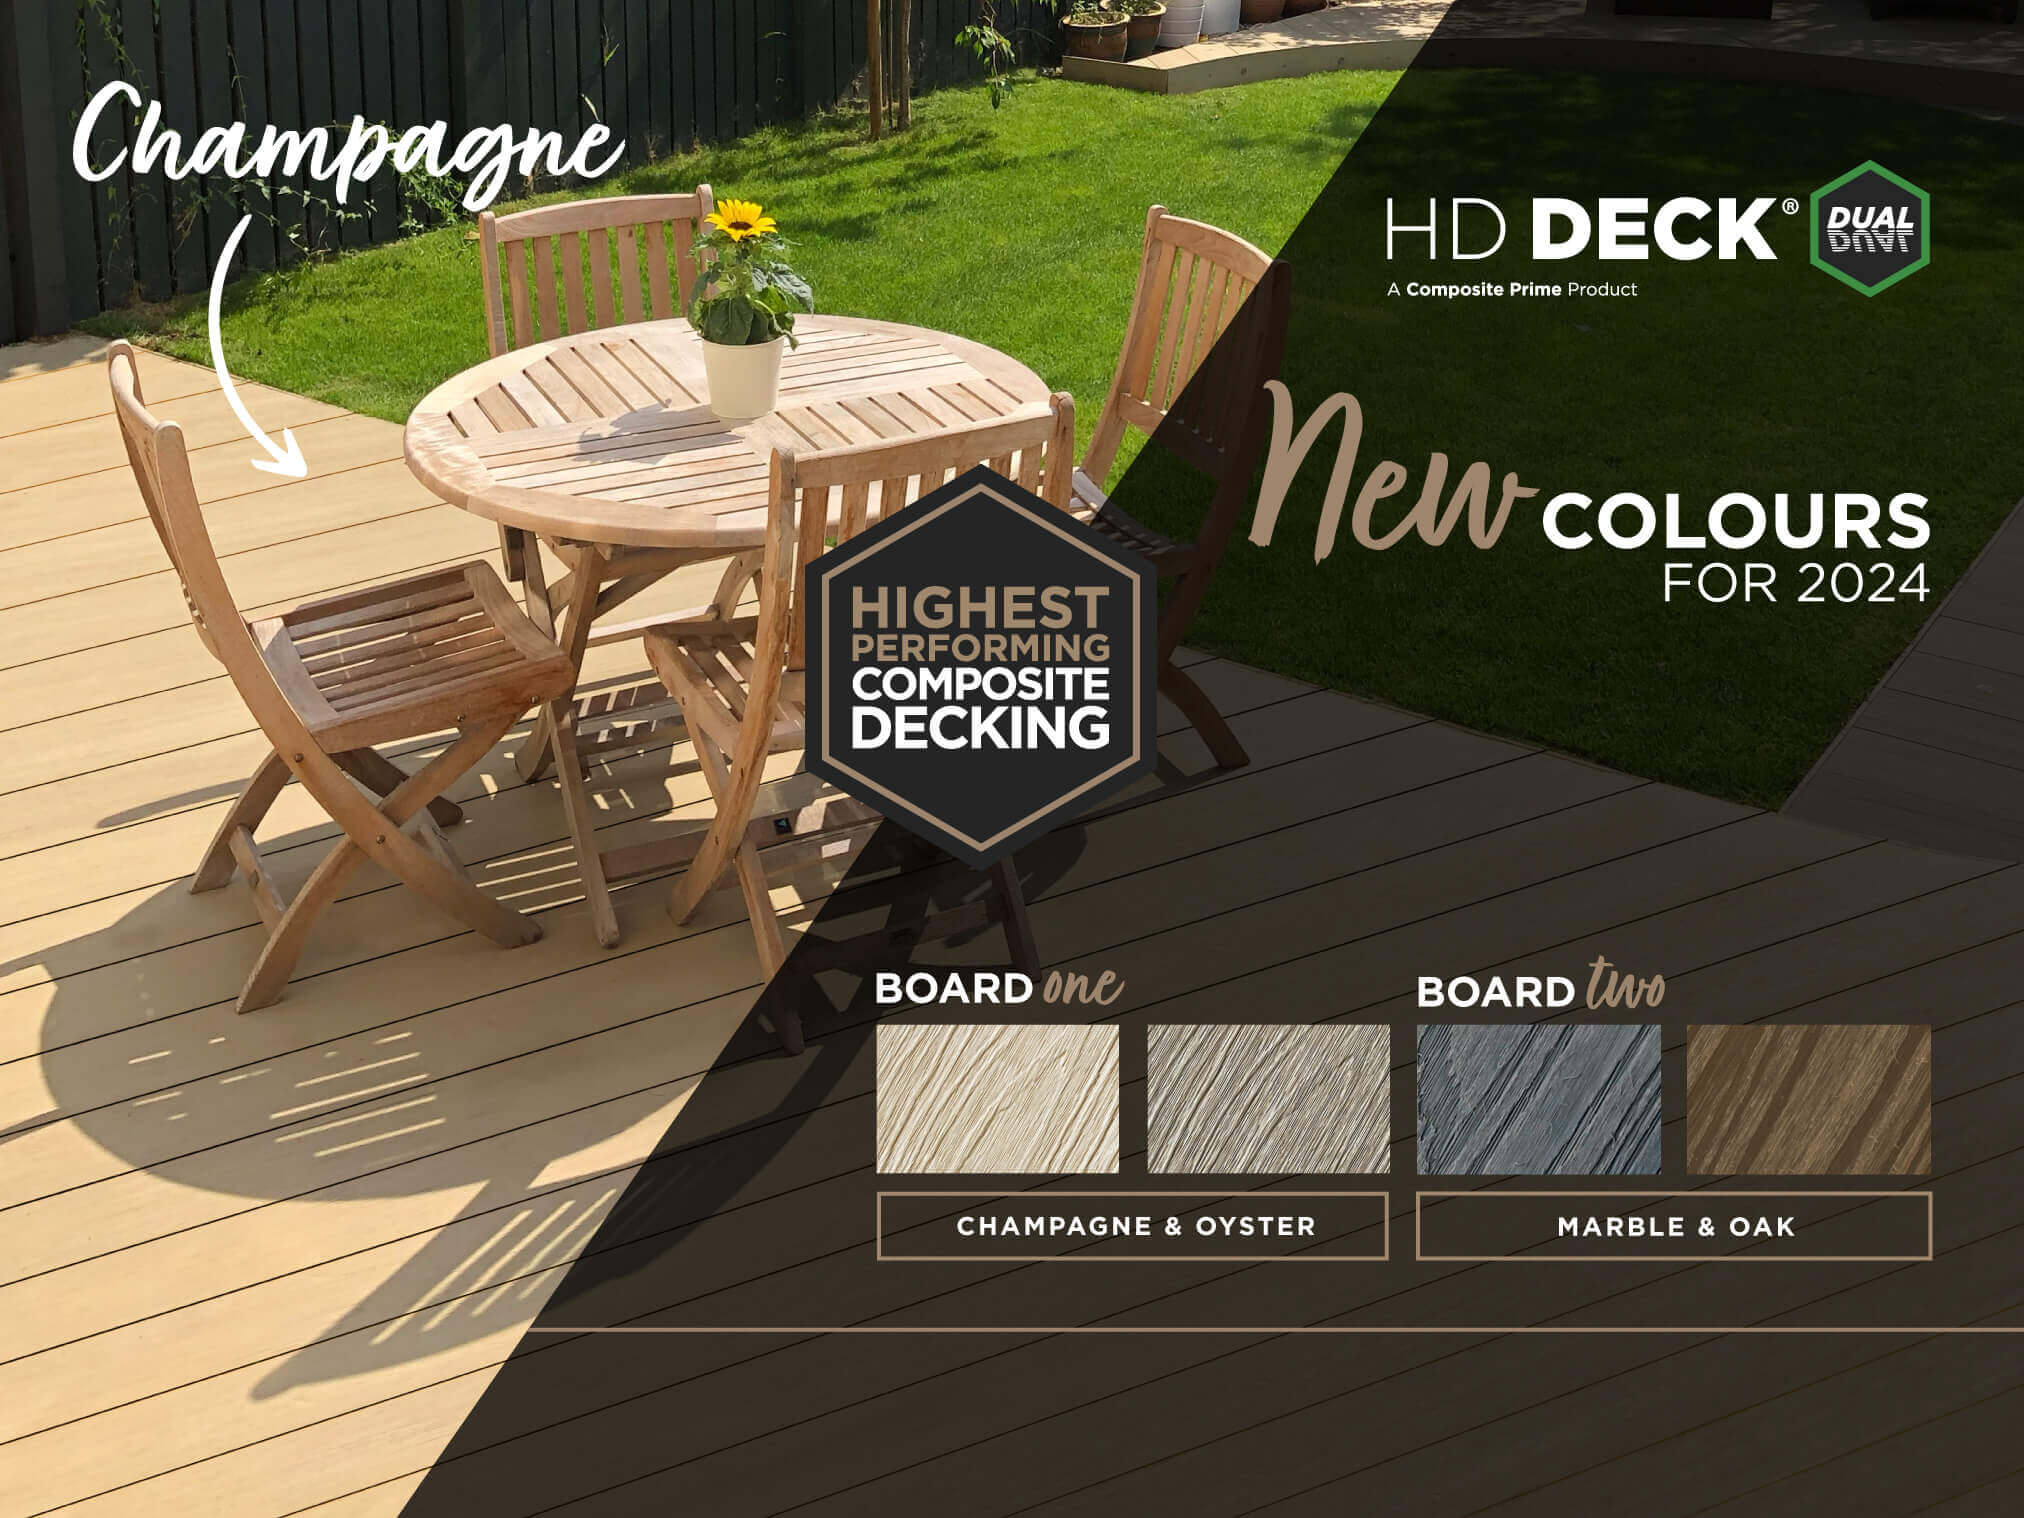 HD Deck Dual deck in Champagne